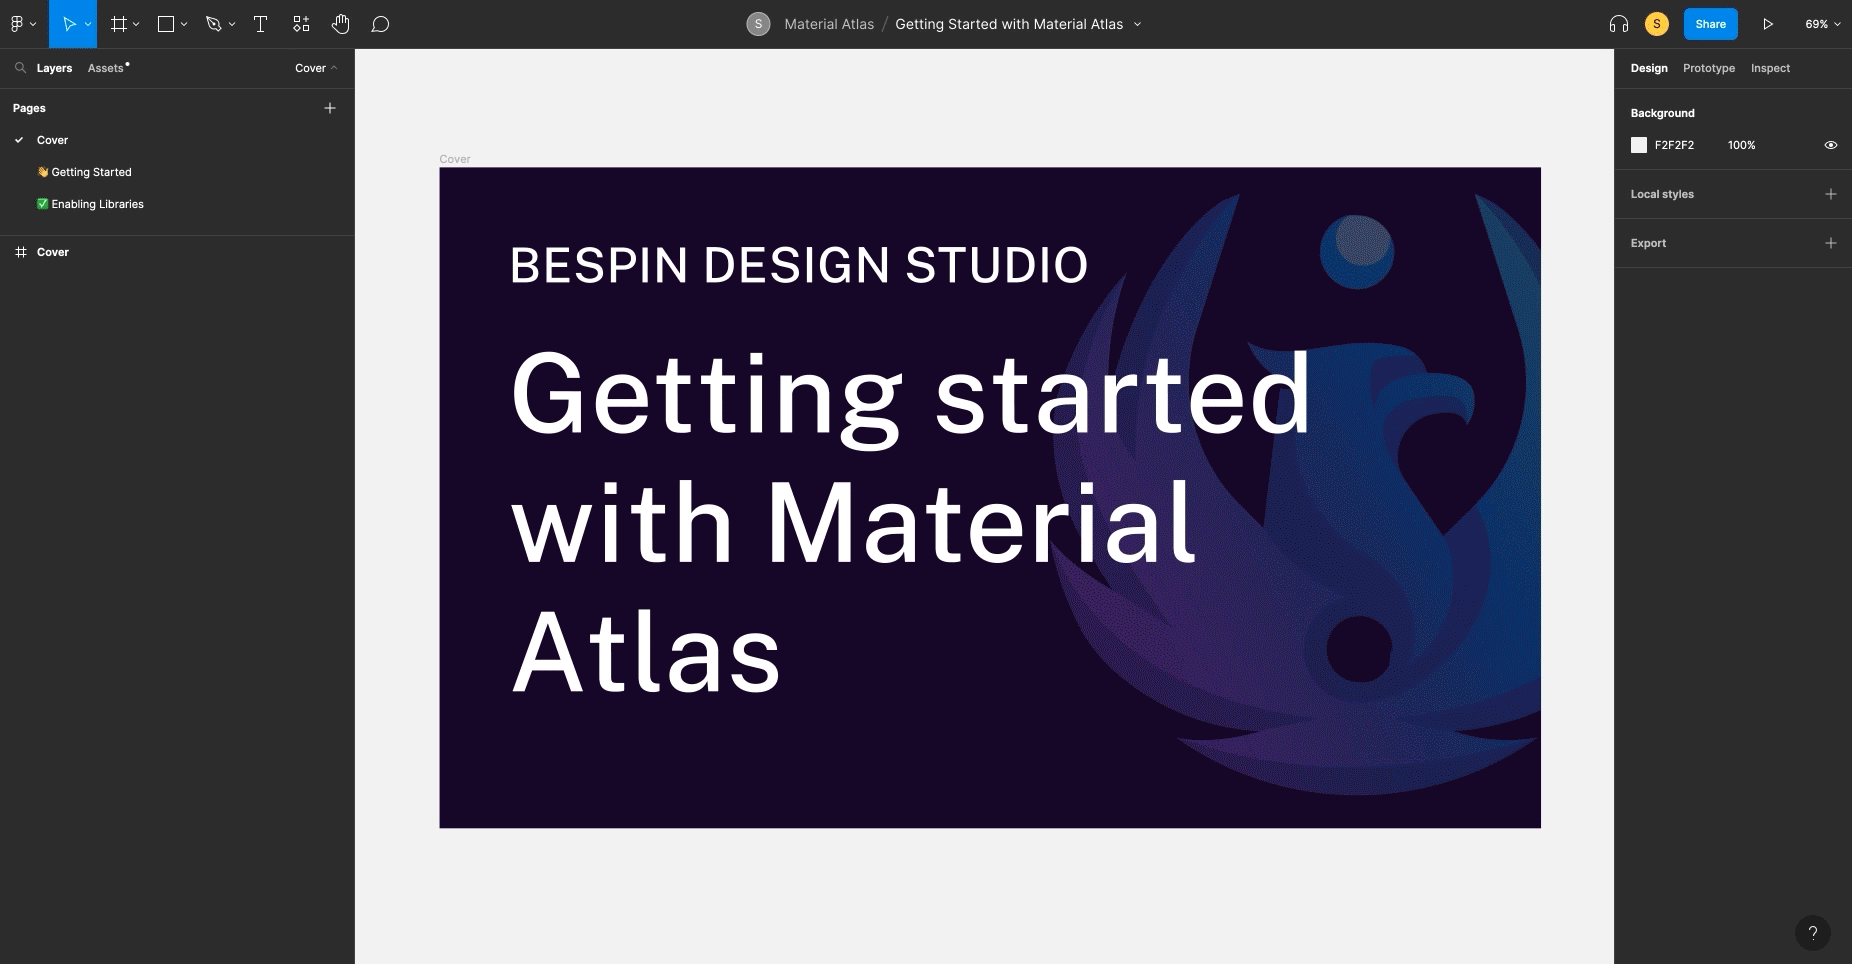 Walkthrough of the Material Atlas BESPIN Design System.